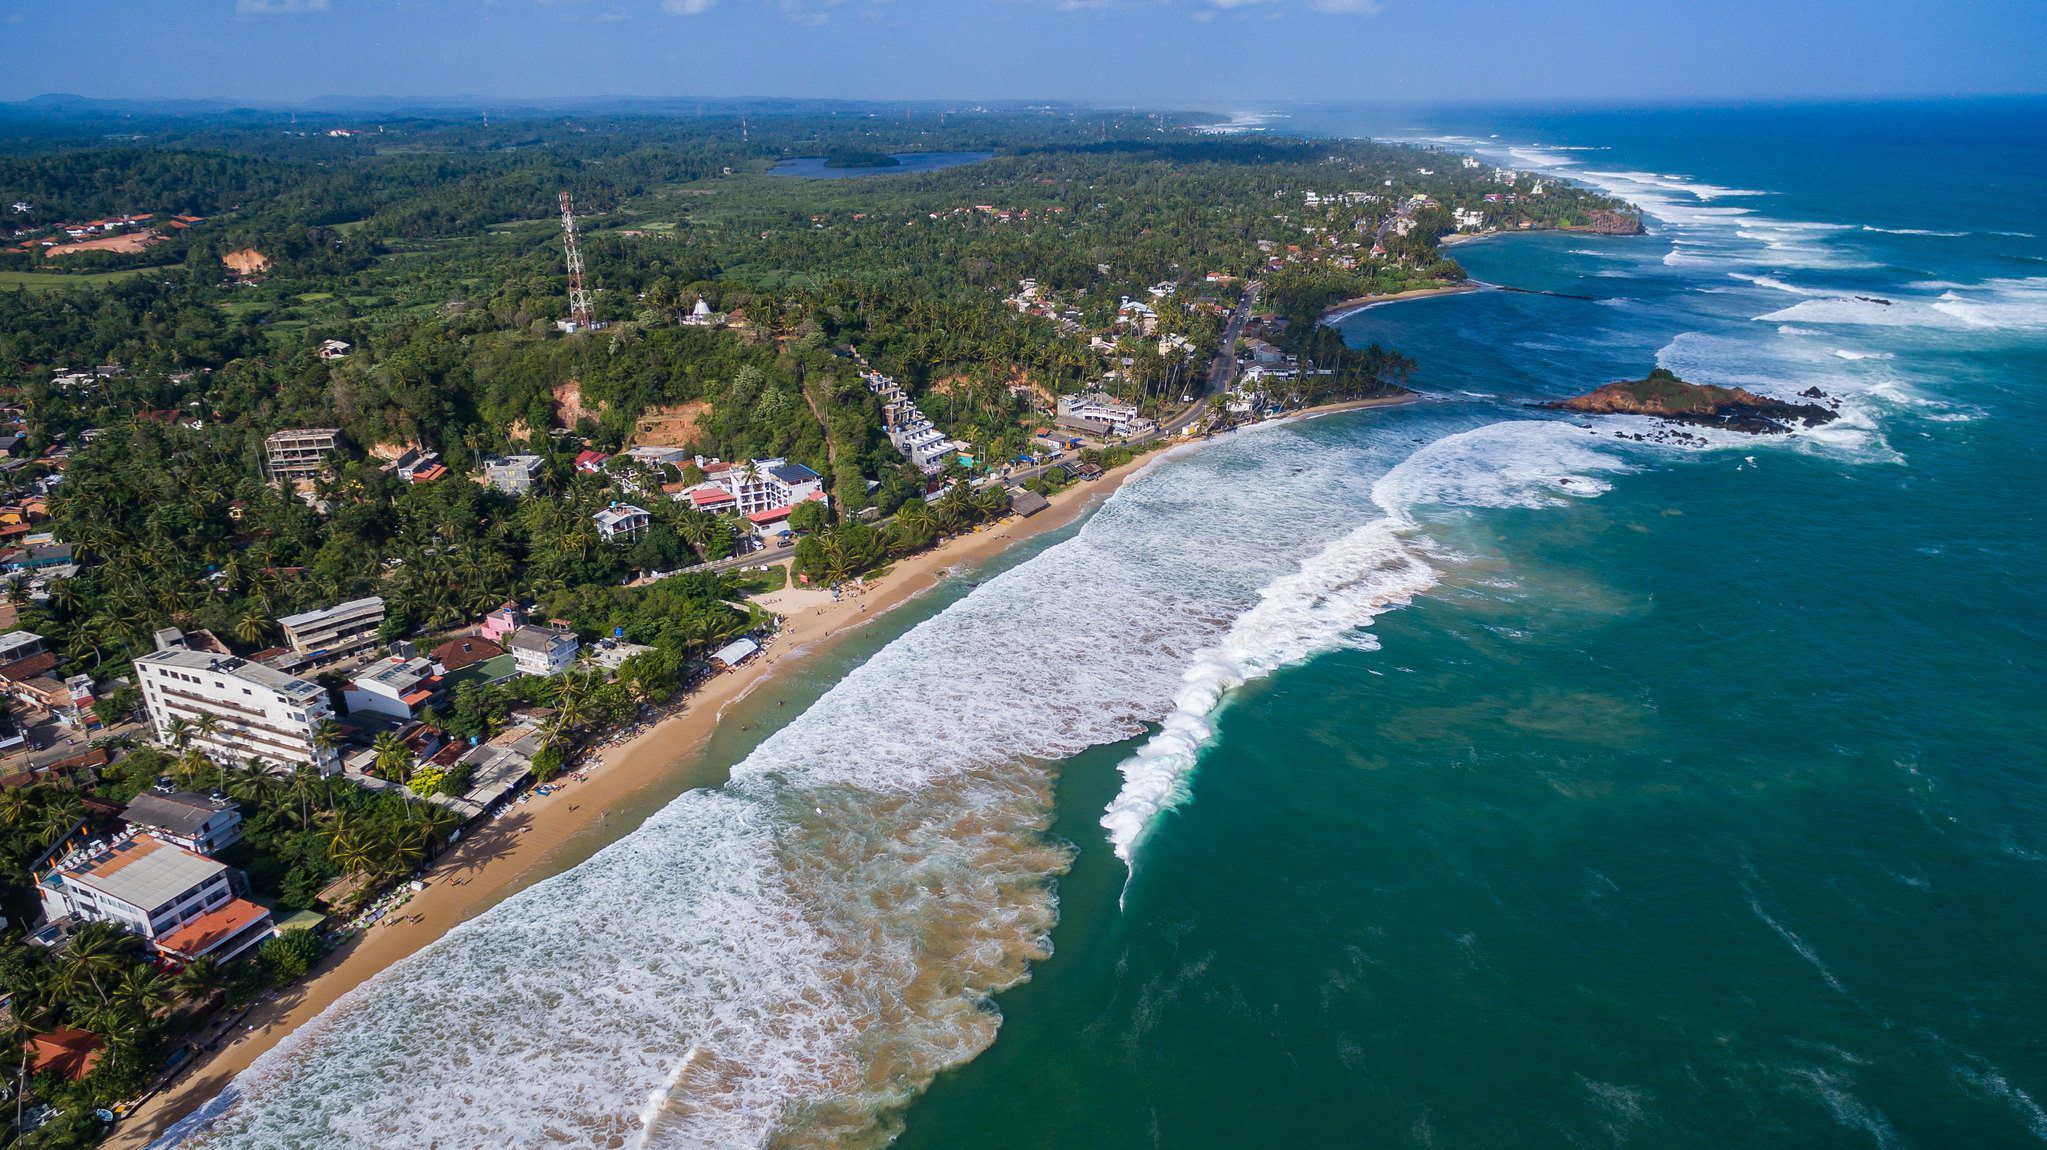 The perfect 7 day Sri Lanka Honeymoon itinerary to rejuvenate